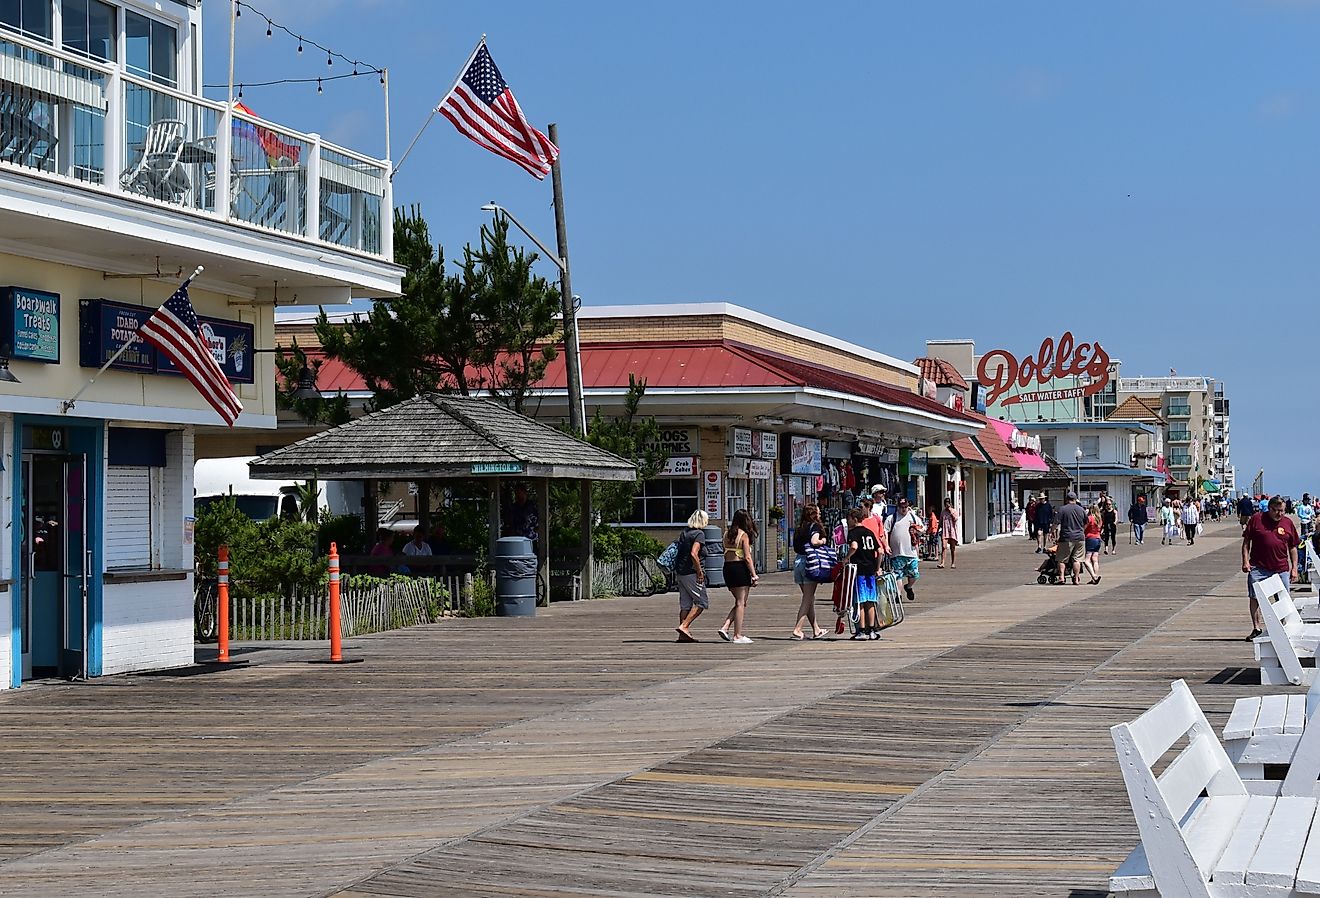 Rehoboth Beach, Delaware boardwalk. Image credit Foolish Productions via Shutterstock